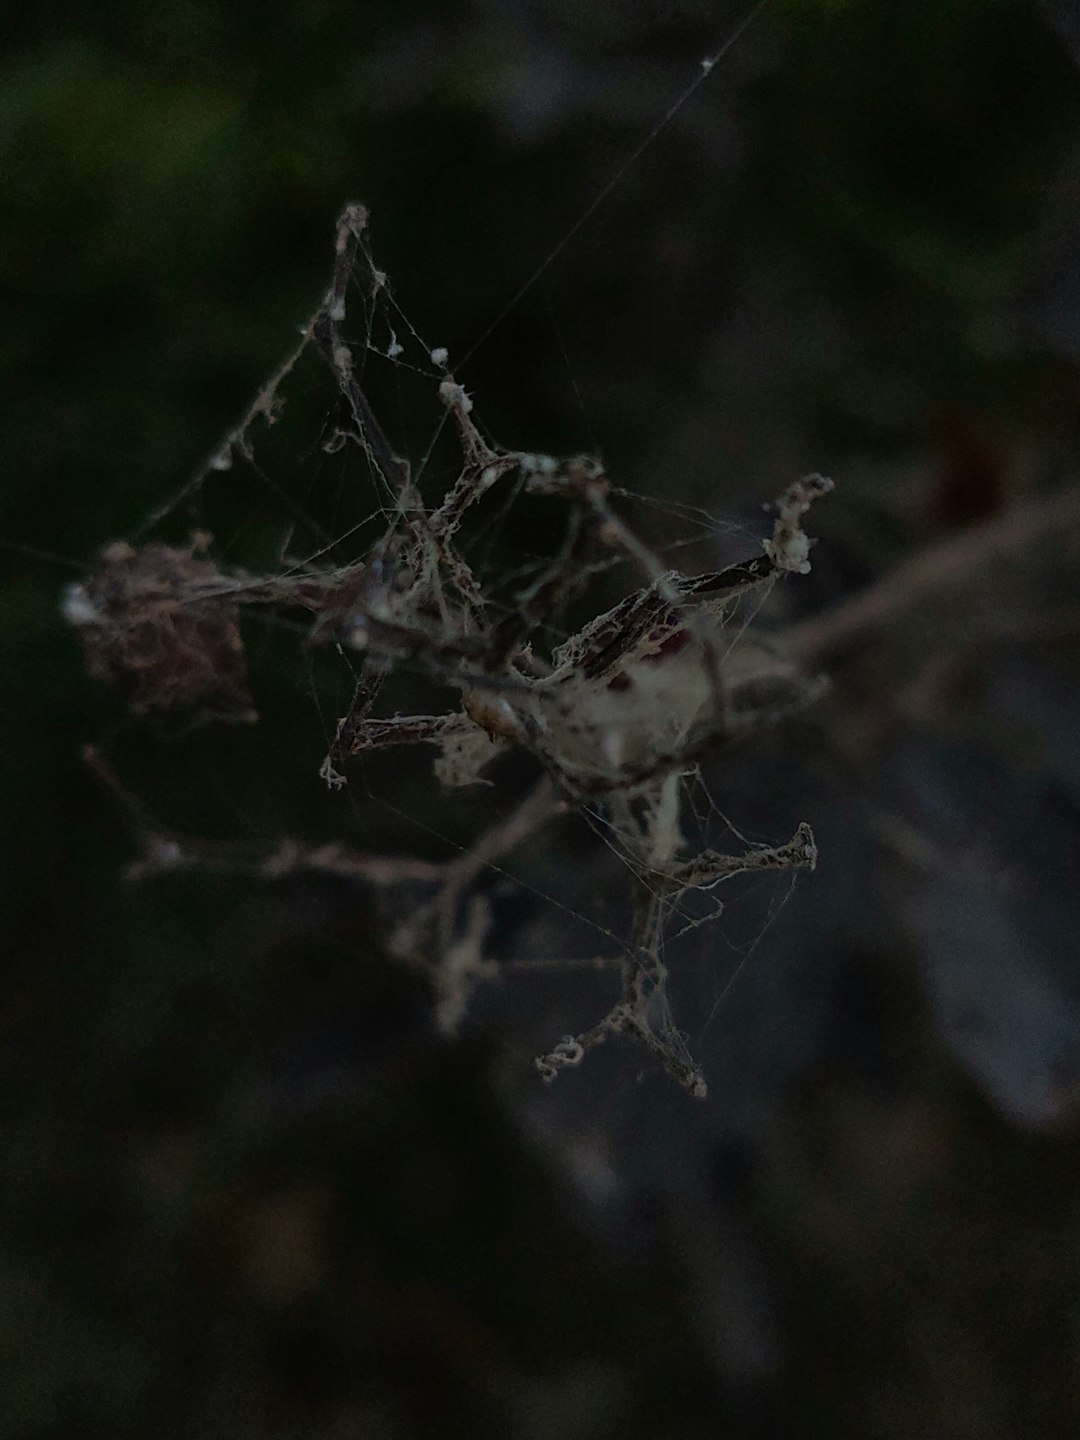 chlorophytum bloom, spider plant, a spider on a web